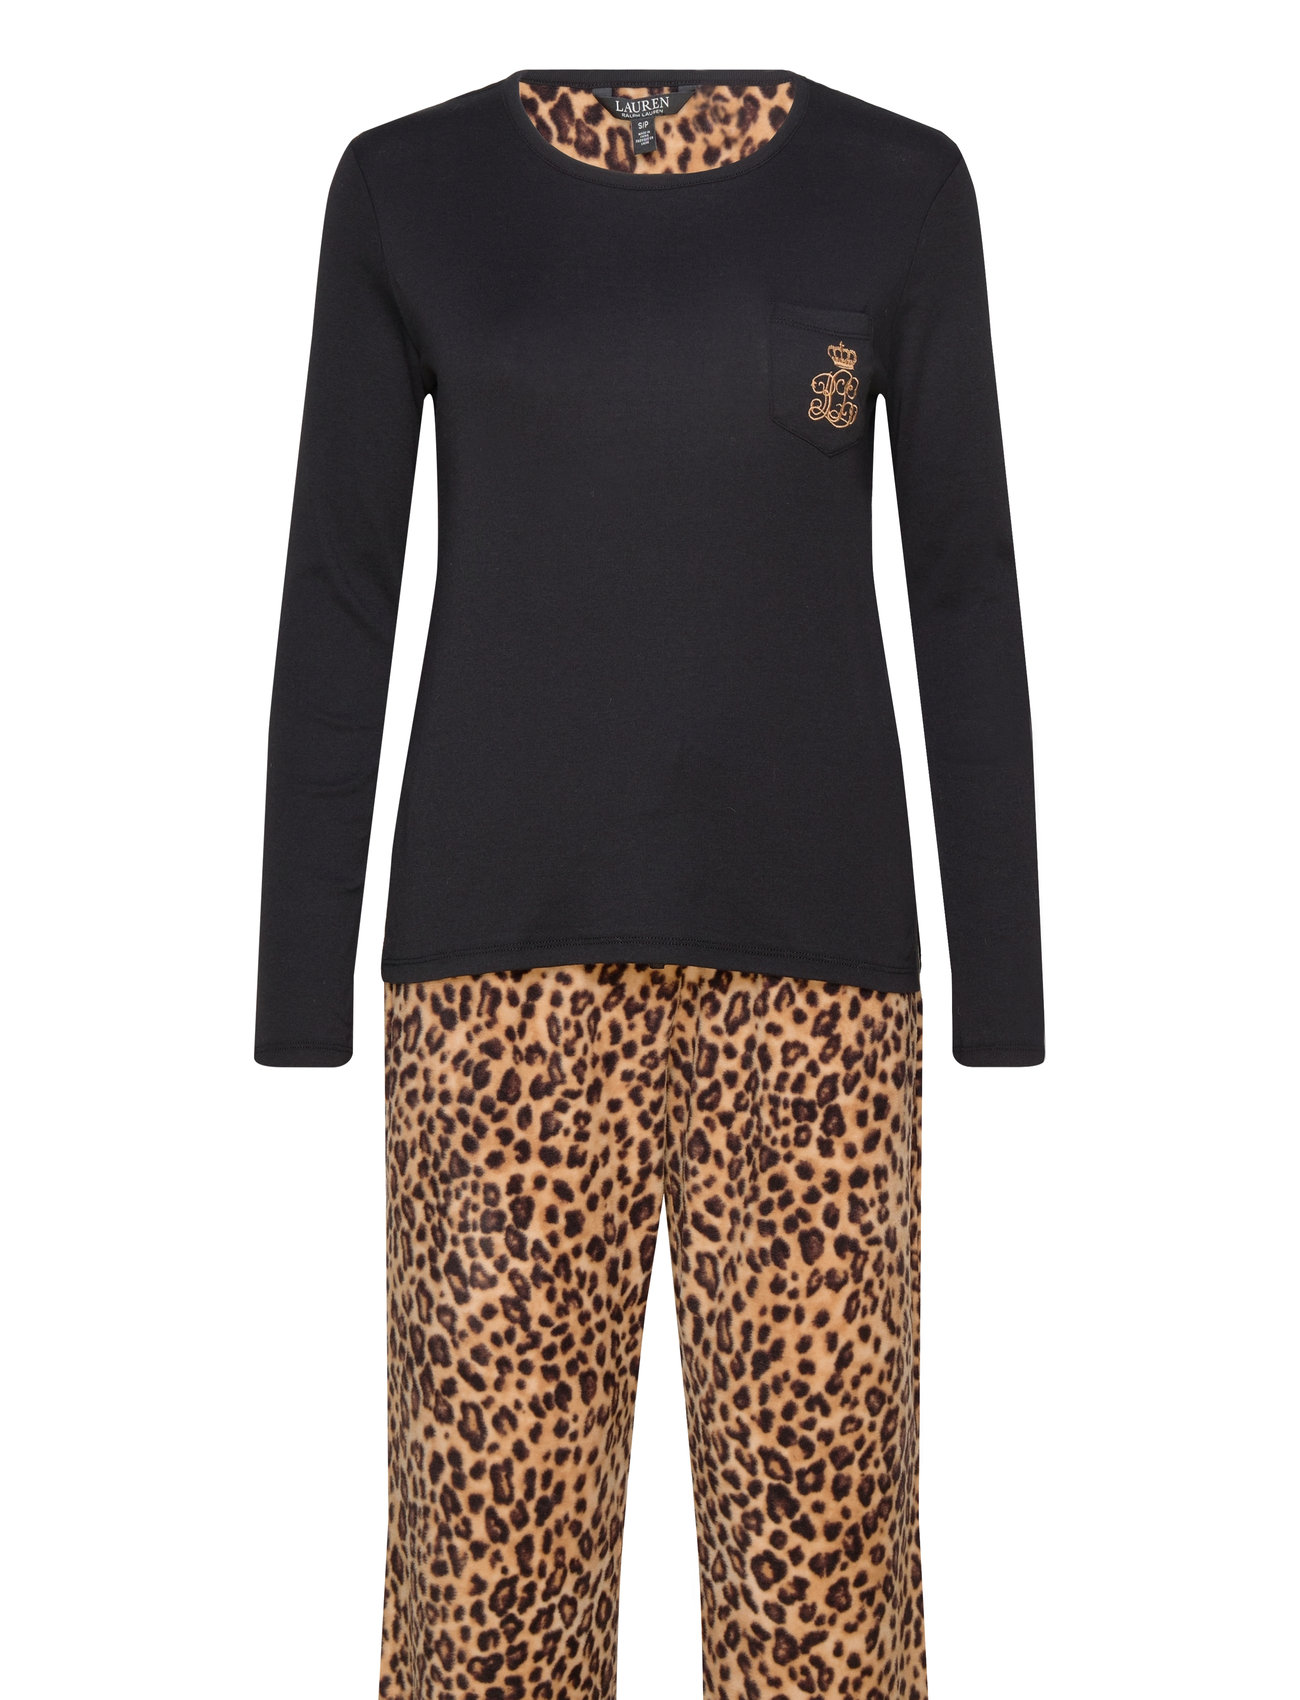 Lrl L/S Knit Top Long Fleece Pant Pj Fol Pyjamas Black Lauren Ralph Lauren Homewear